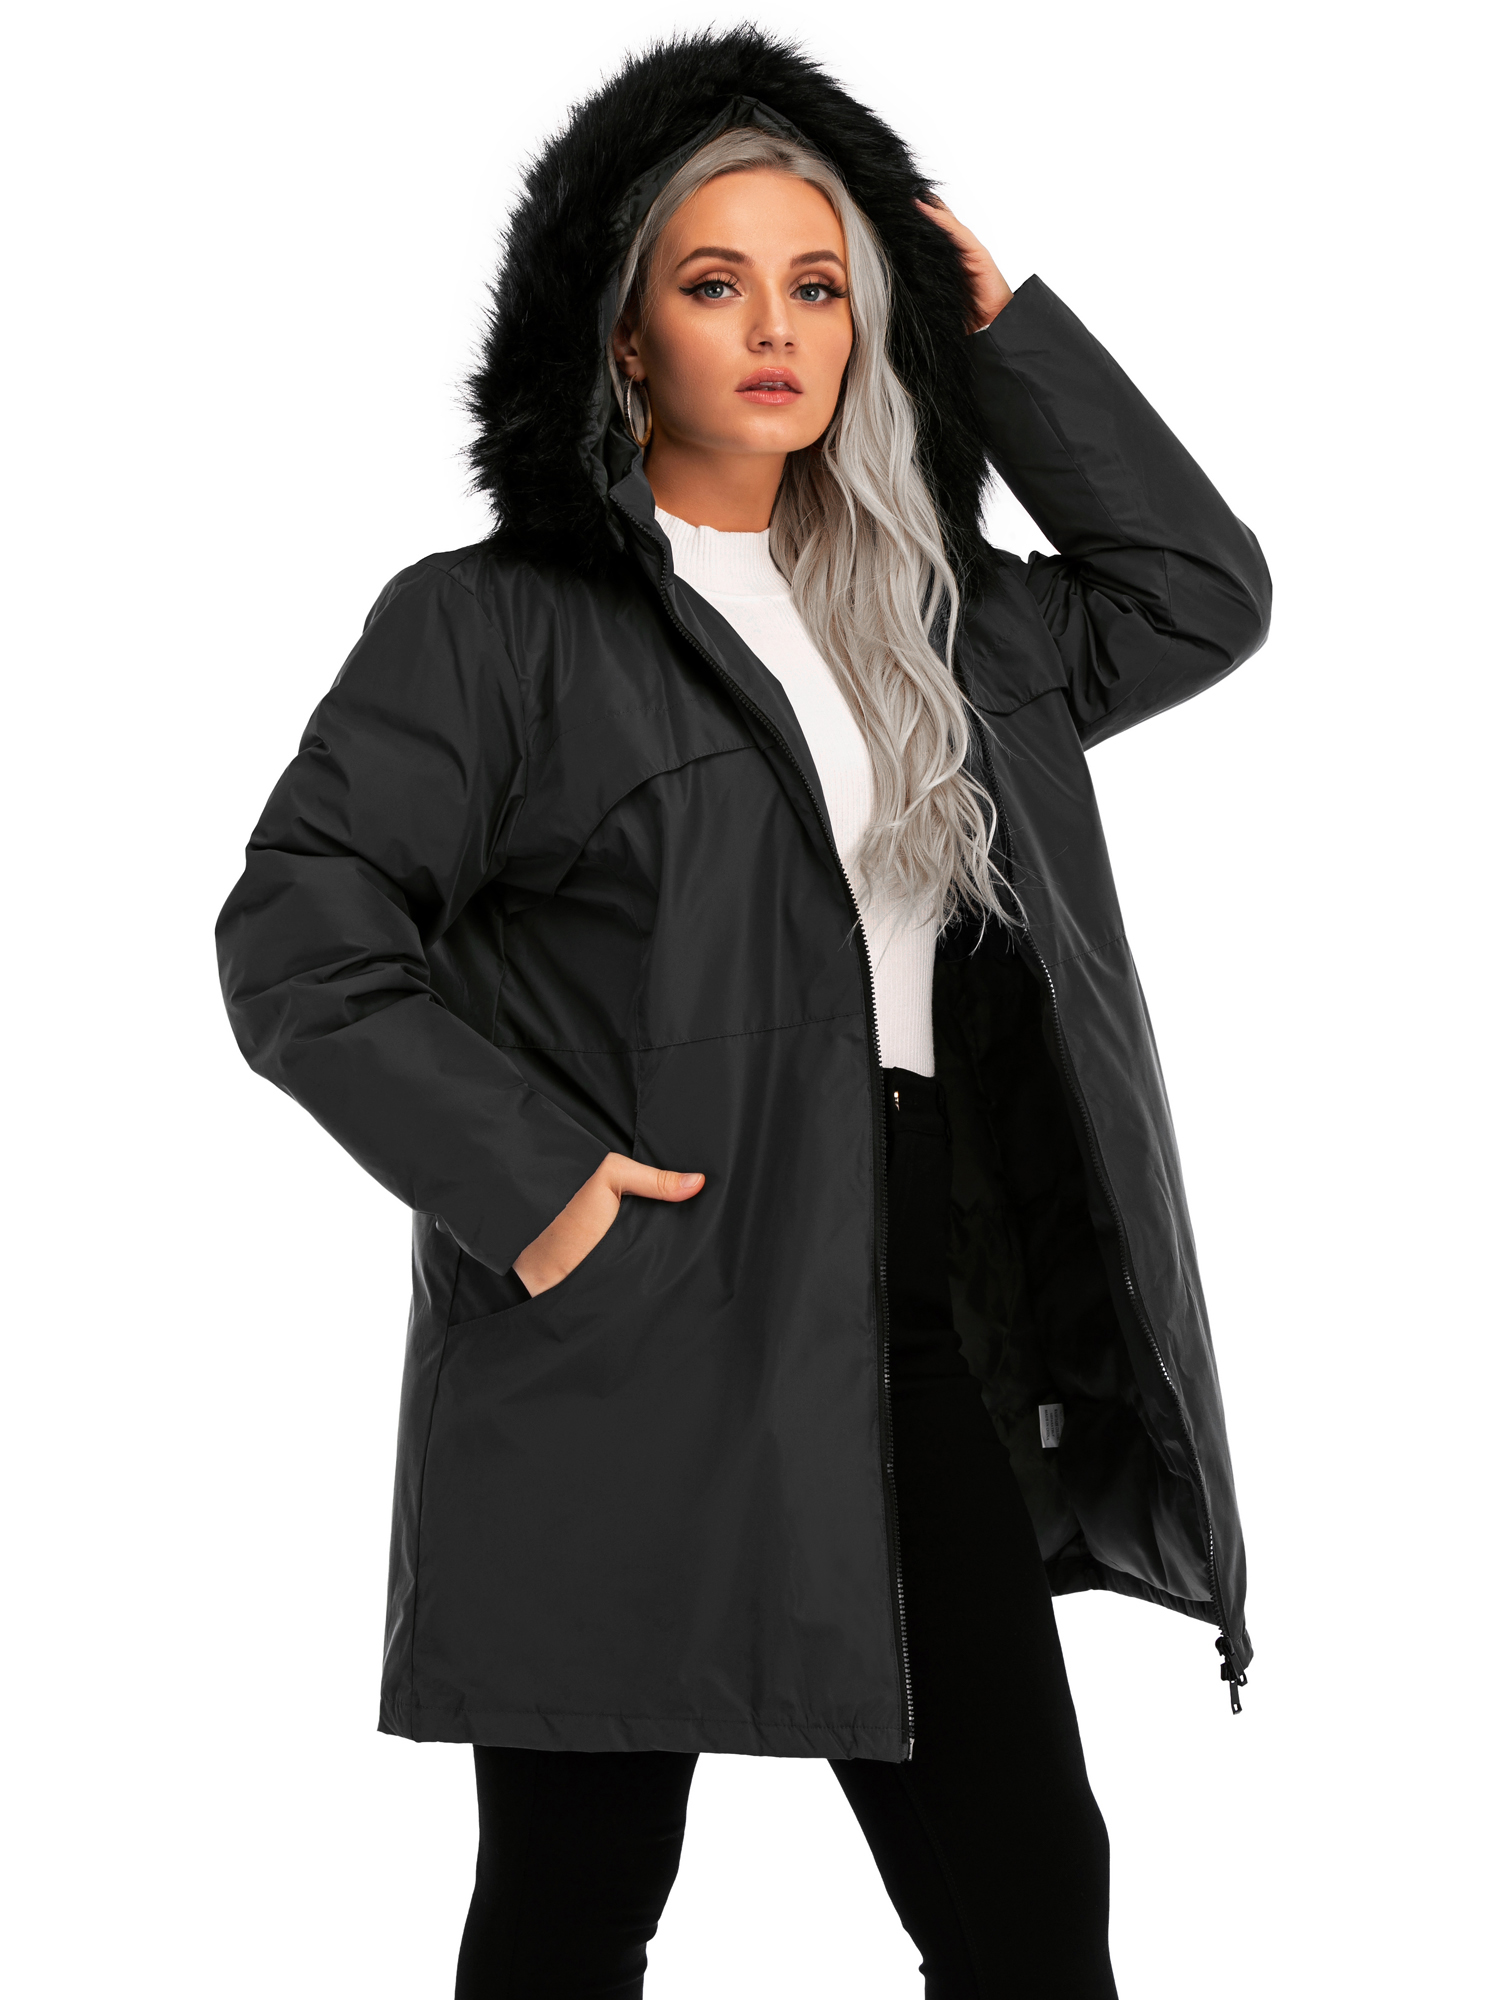 LELINTA Women's Plus Size Winter Warm Zipper Hoodie Long Jacket Waterproof Jacket Hooded Lightweight Raincoat Active Outdoor Trench Coat - image 1 of 7